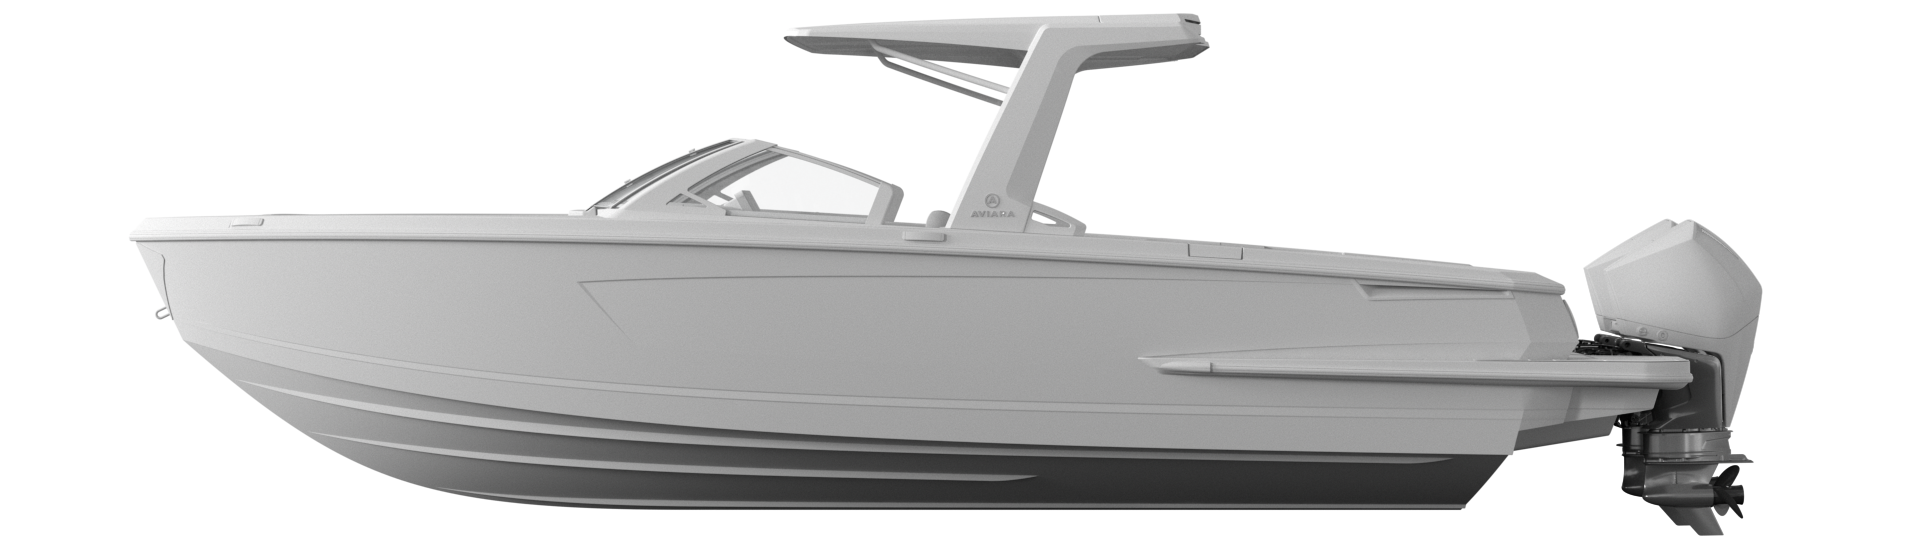 Outboard Profile